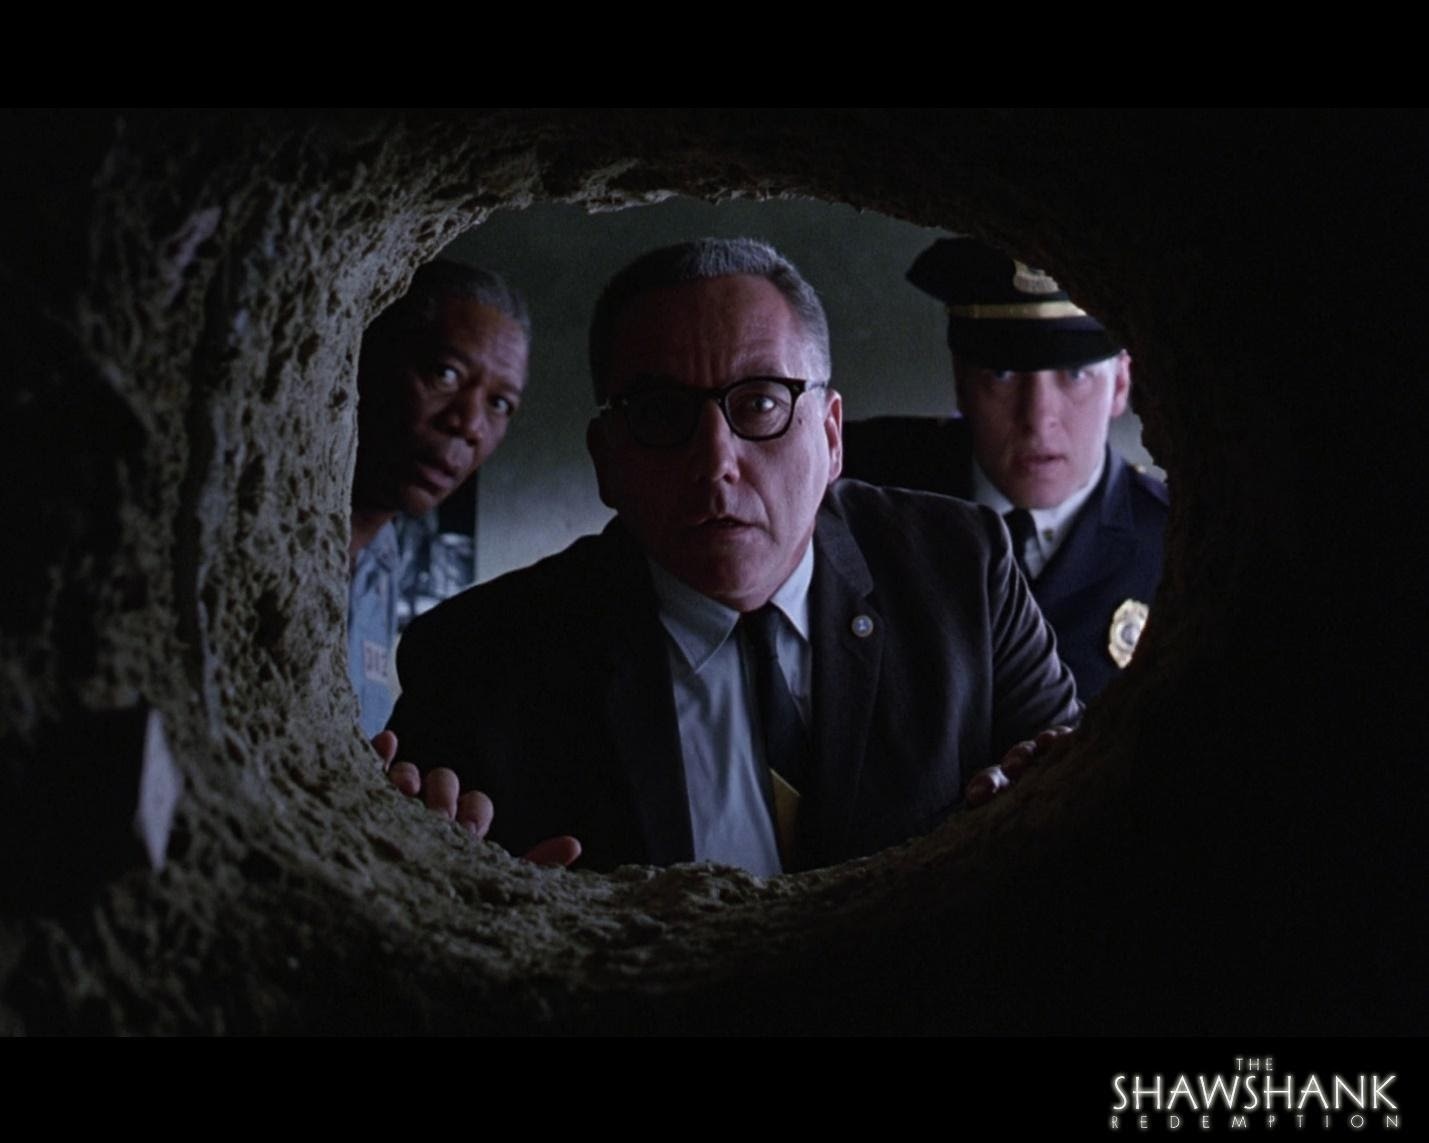 Bob Gunton in a Shawshank Redemption poster with Morgan Freeman and Clancy Brown